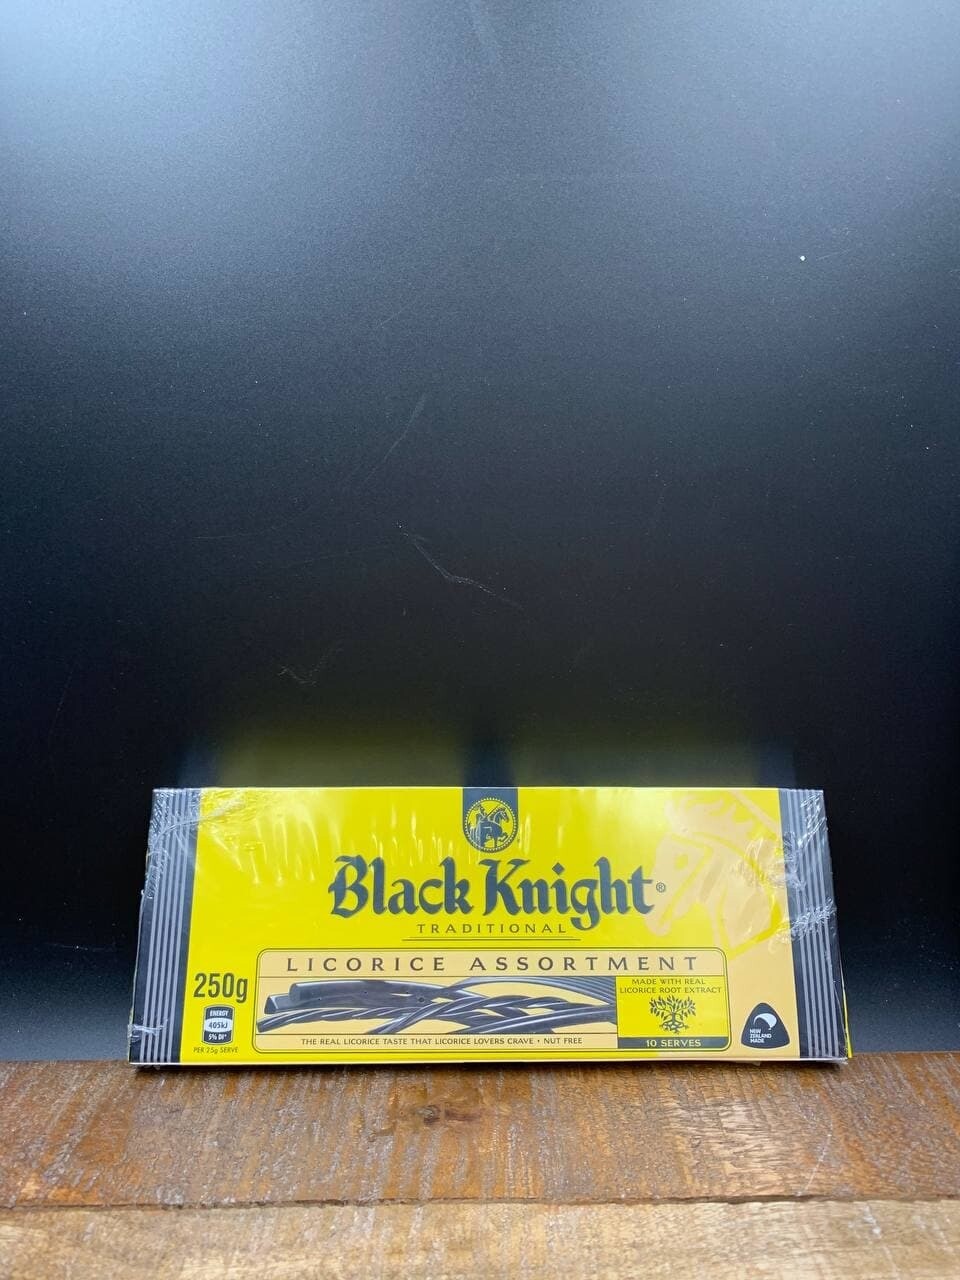 Black Knight Traditional Licorice Assortment